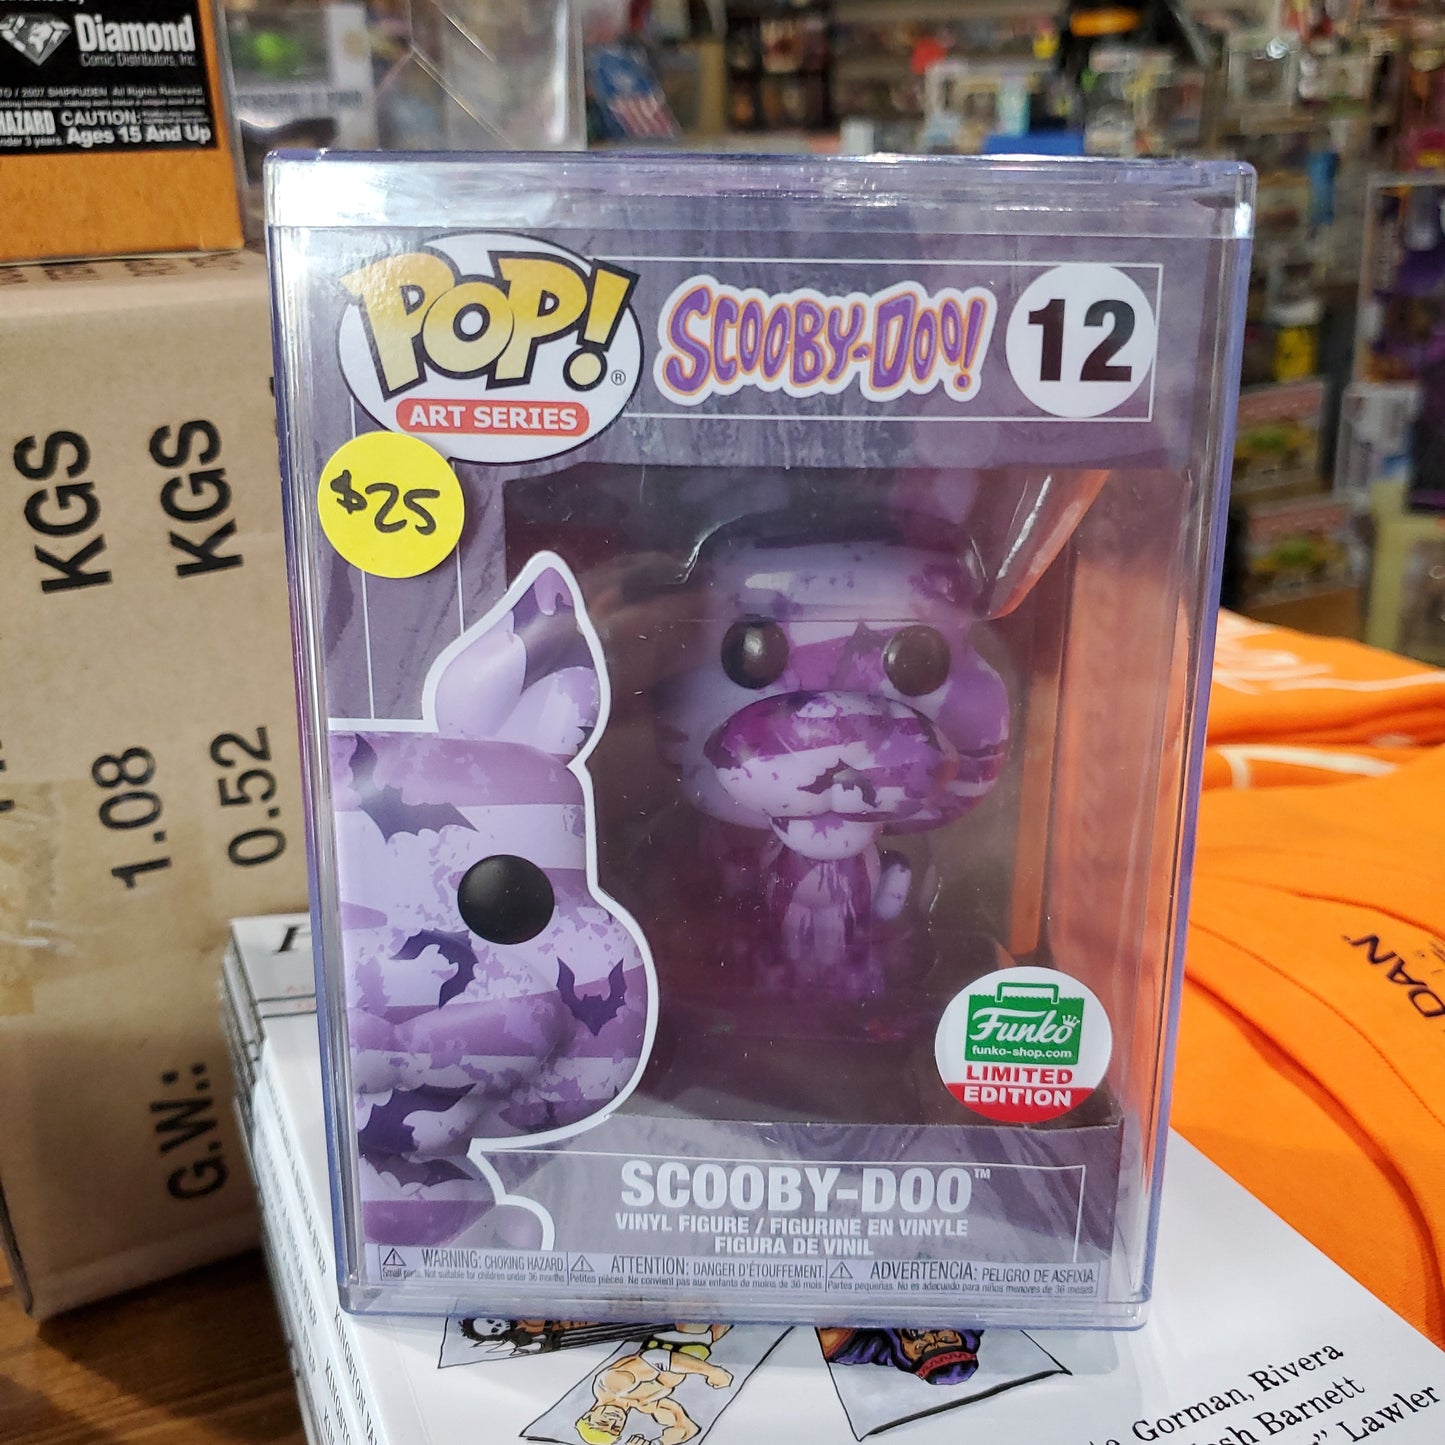 Scooby Doo #12 (Artist Series) w/case - Funko Pop! Vinyl Figure (cartoon)